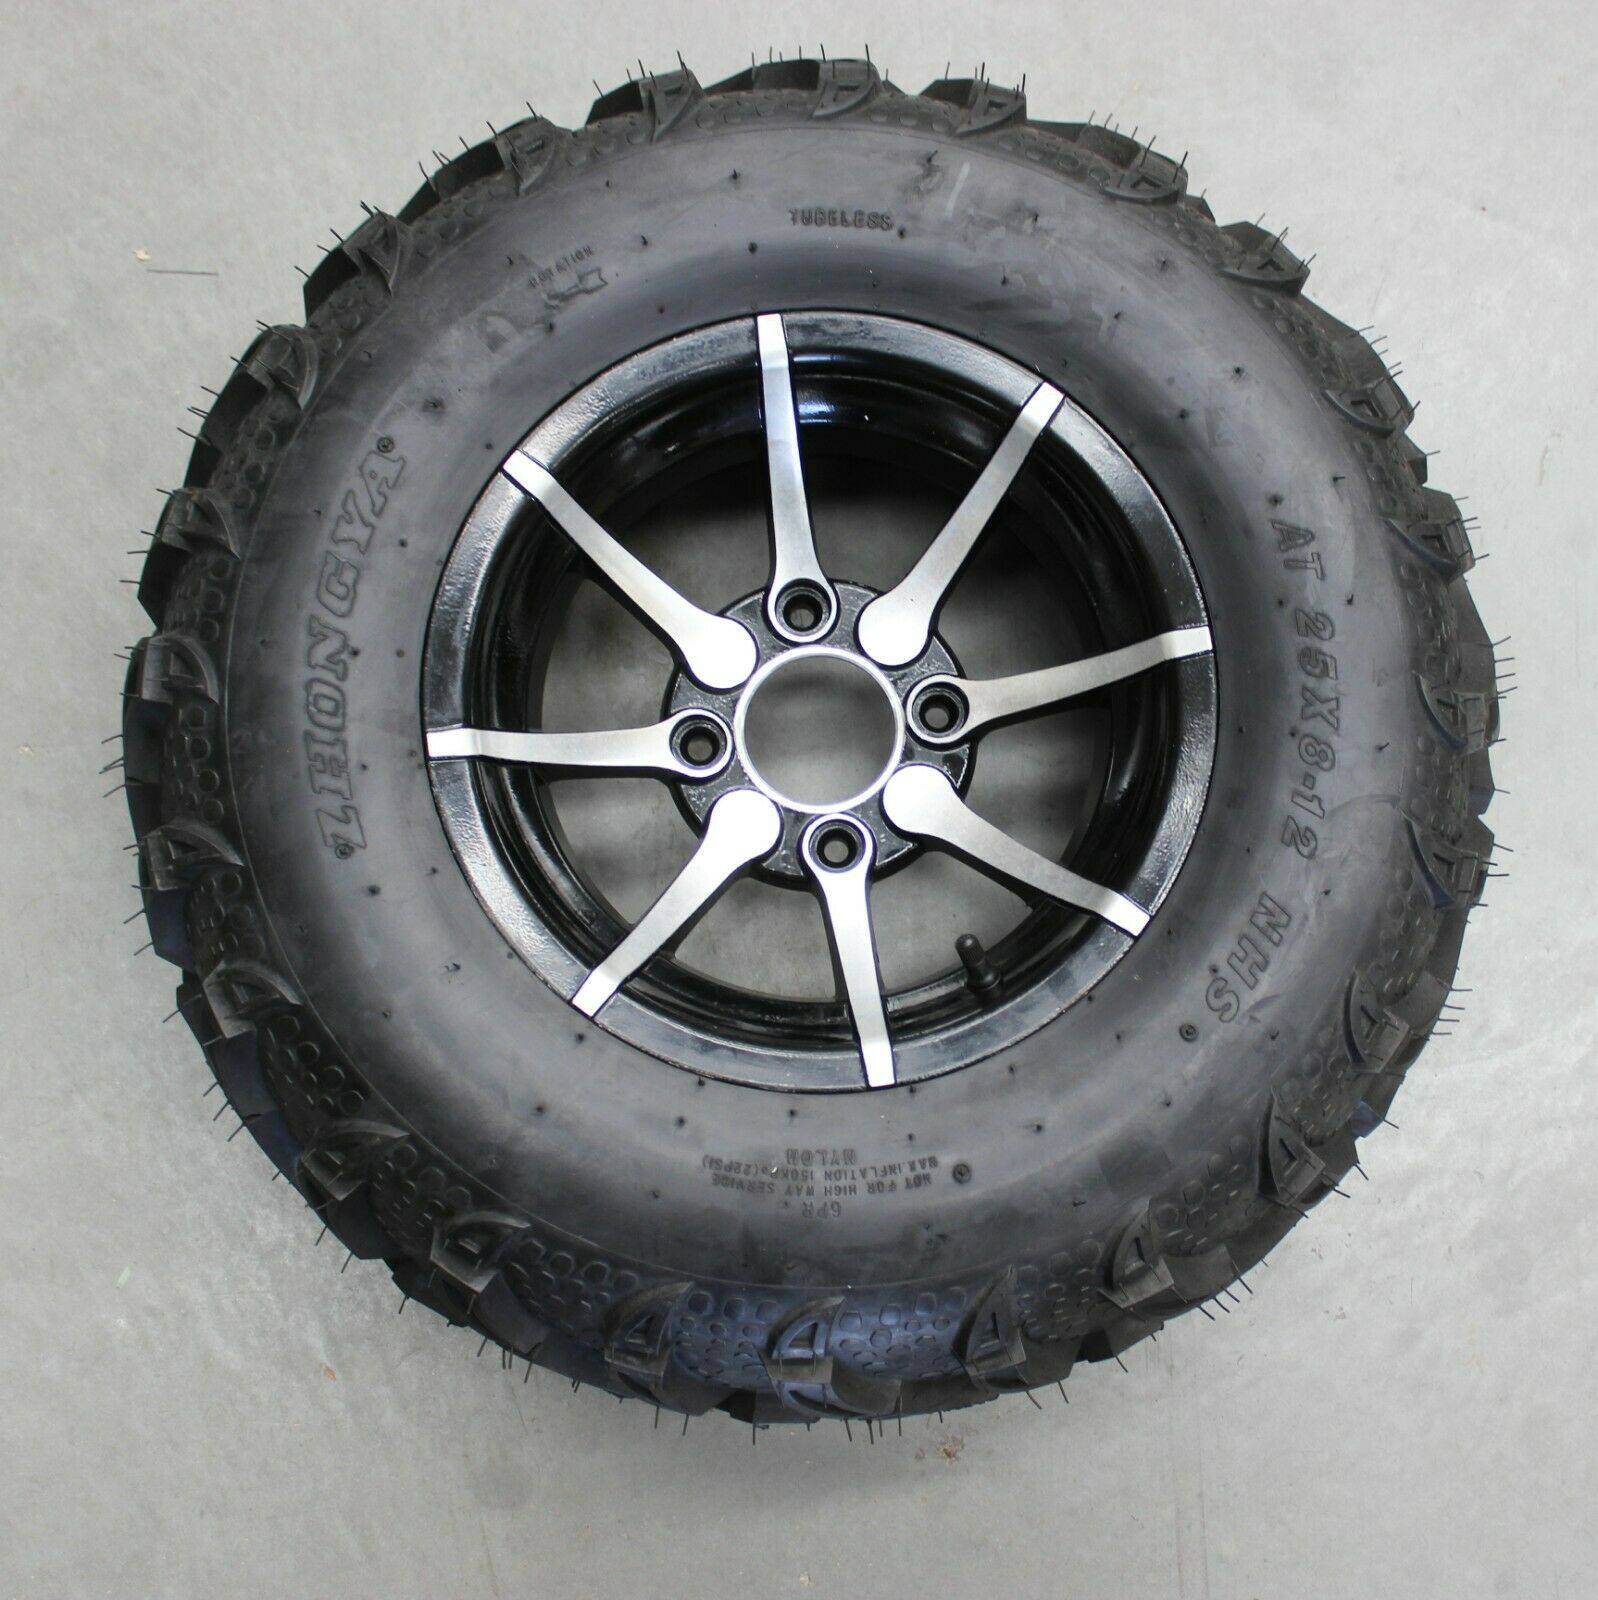 25X8-12" Front Alloy Wheel Rim Tyre Tire For Quad Dirt Bike ATV Buggy - TDRMOTO